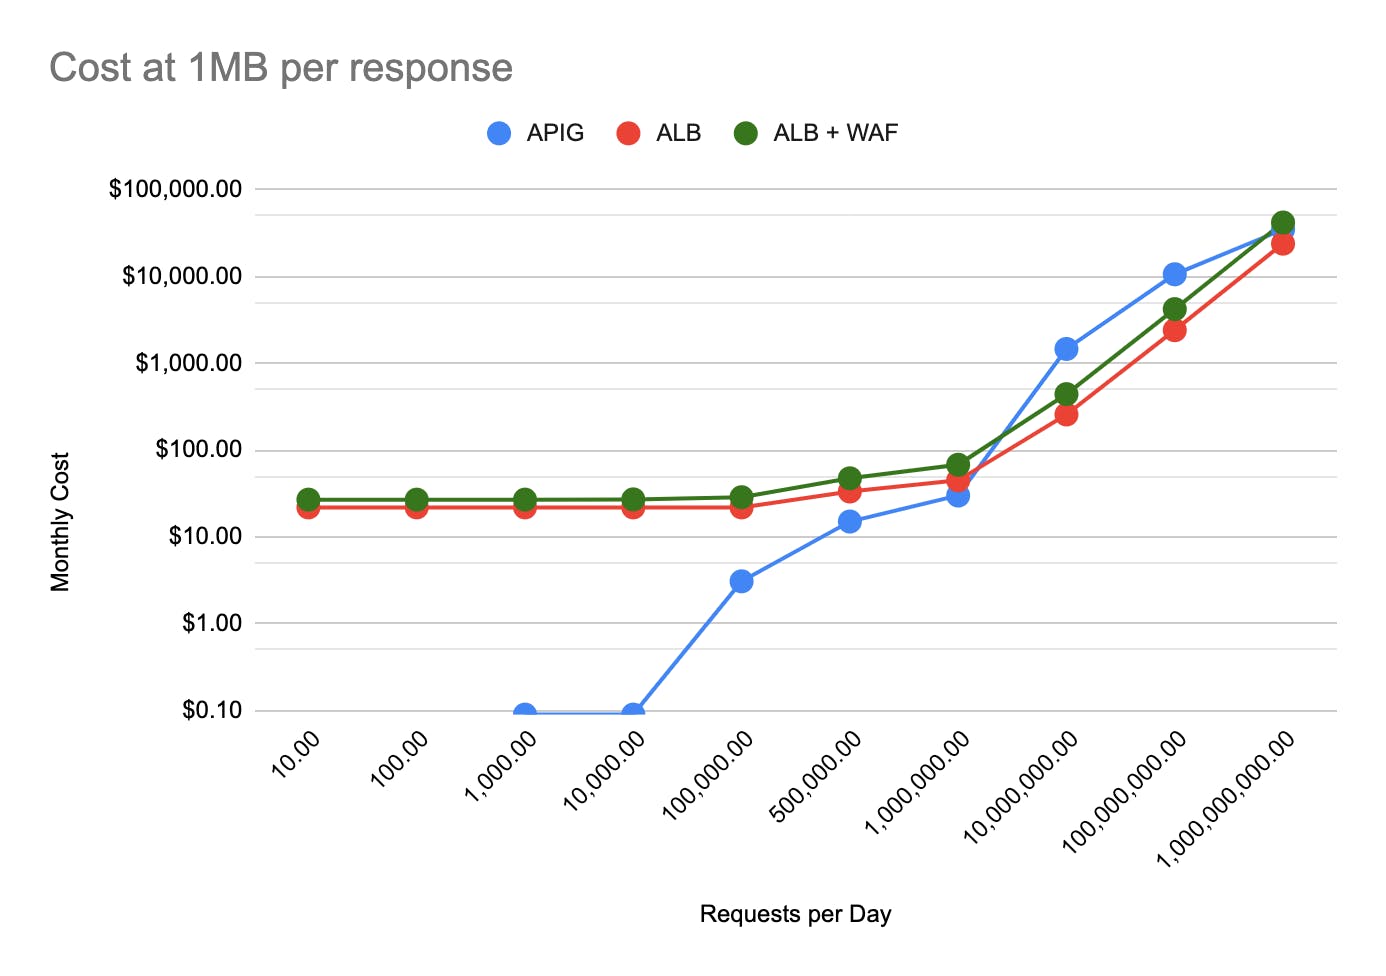 Chart comparing API Gateway and ALB cost at 1MB per response.